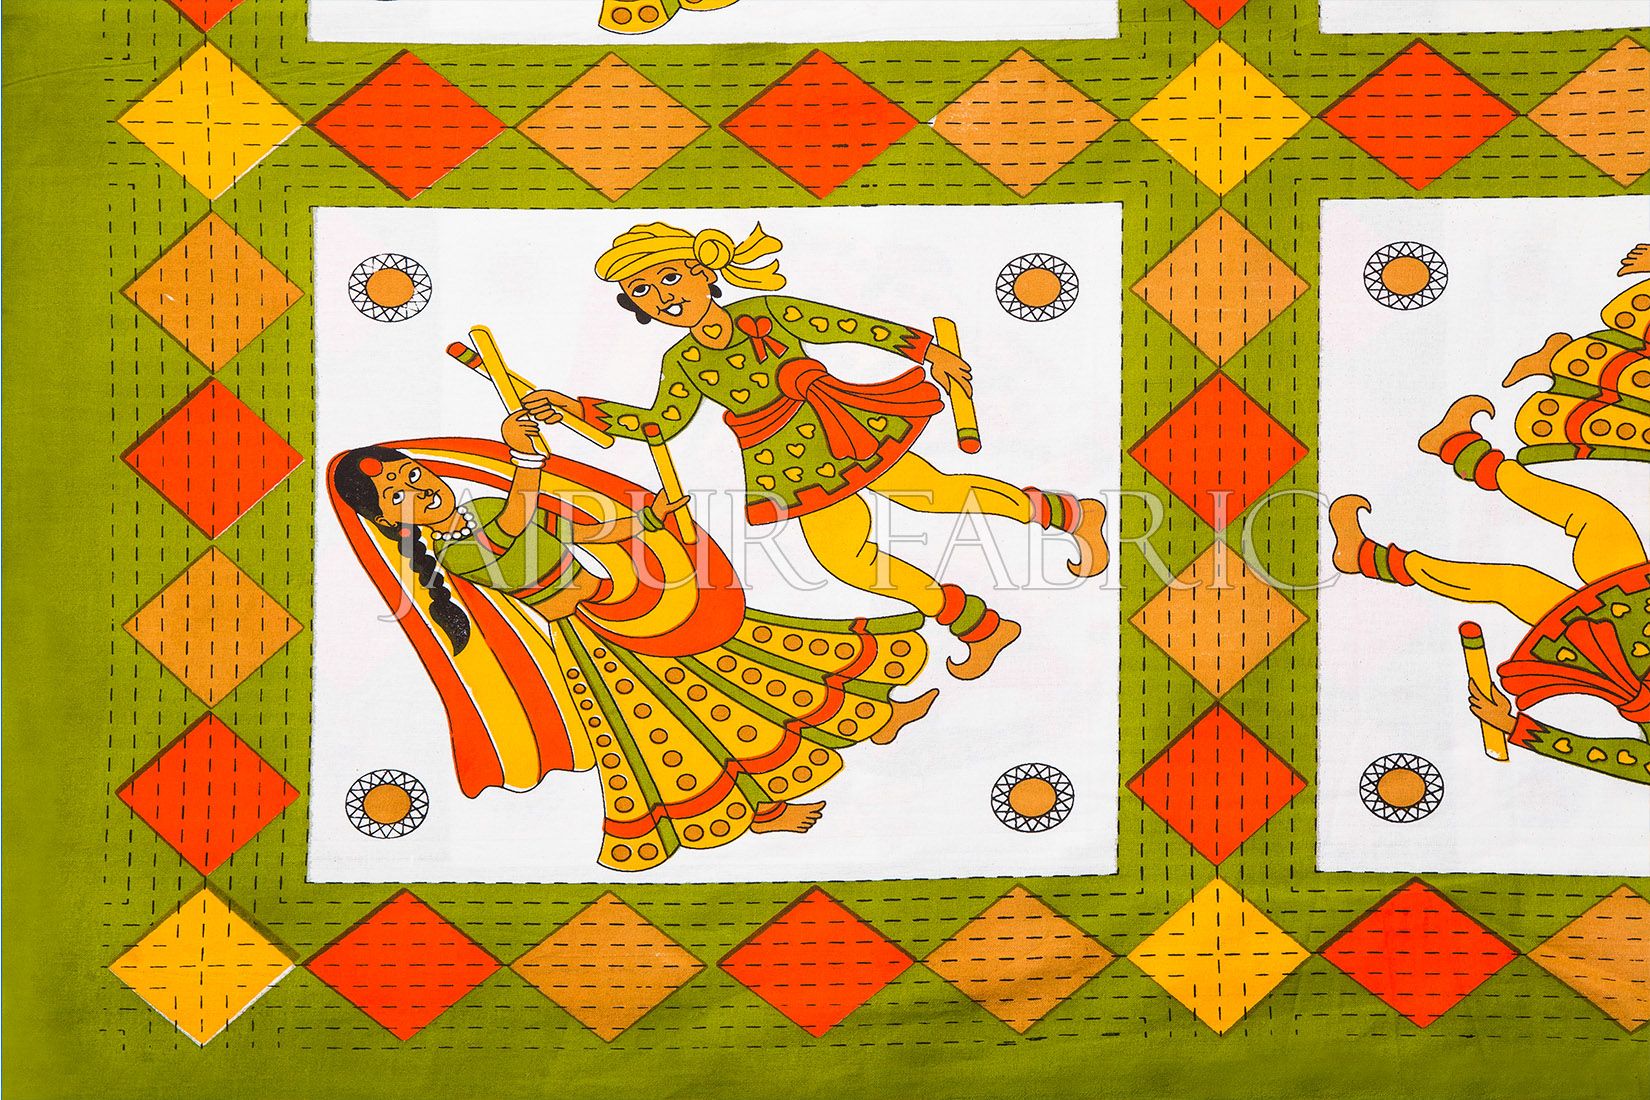 Green Base Jaipuri Folk Dance Cotton Double Bed Sheet